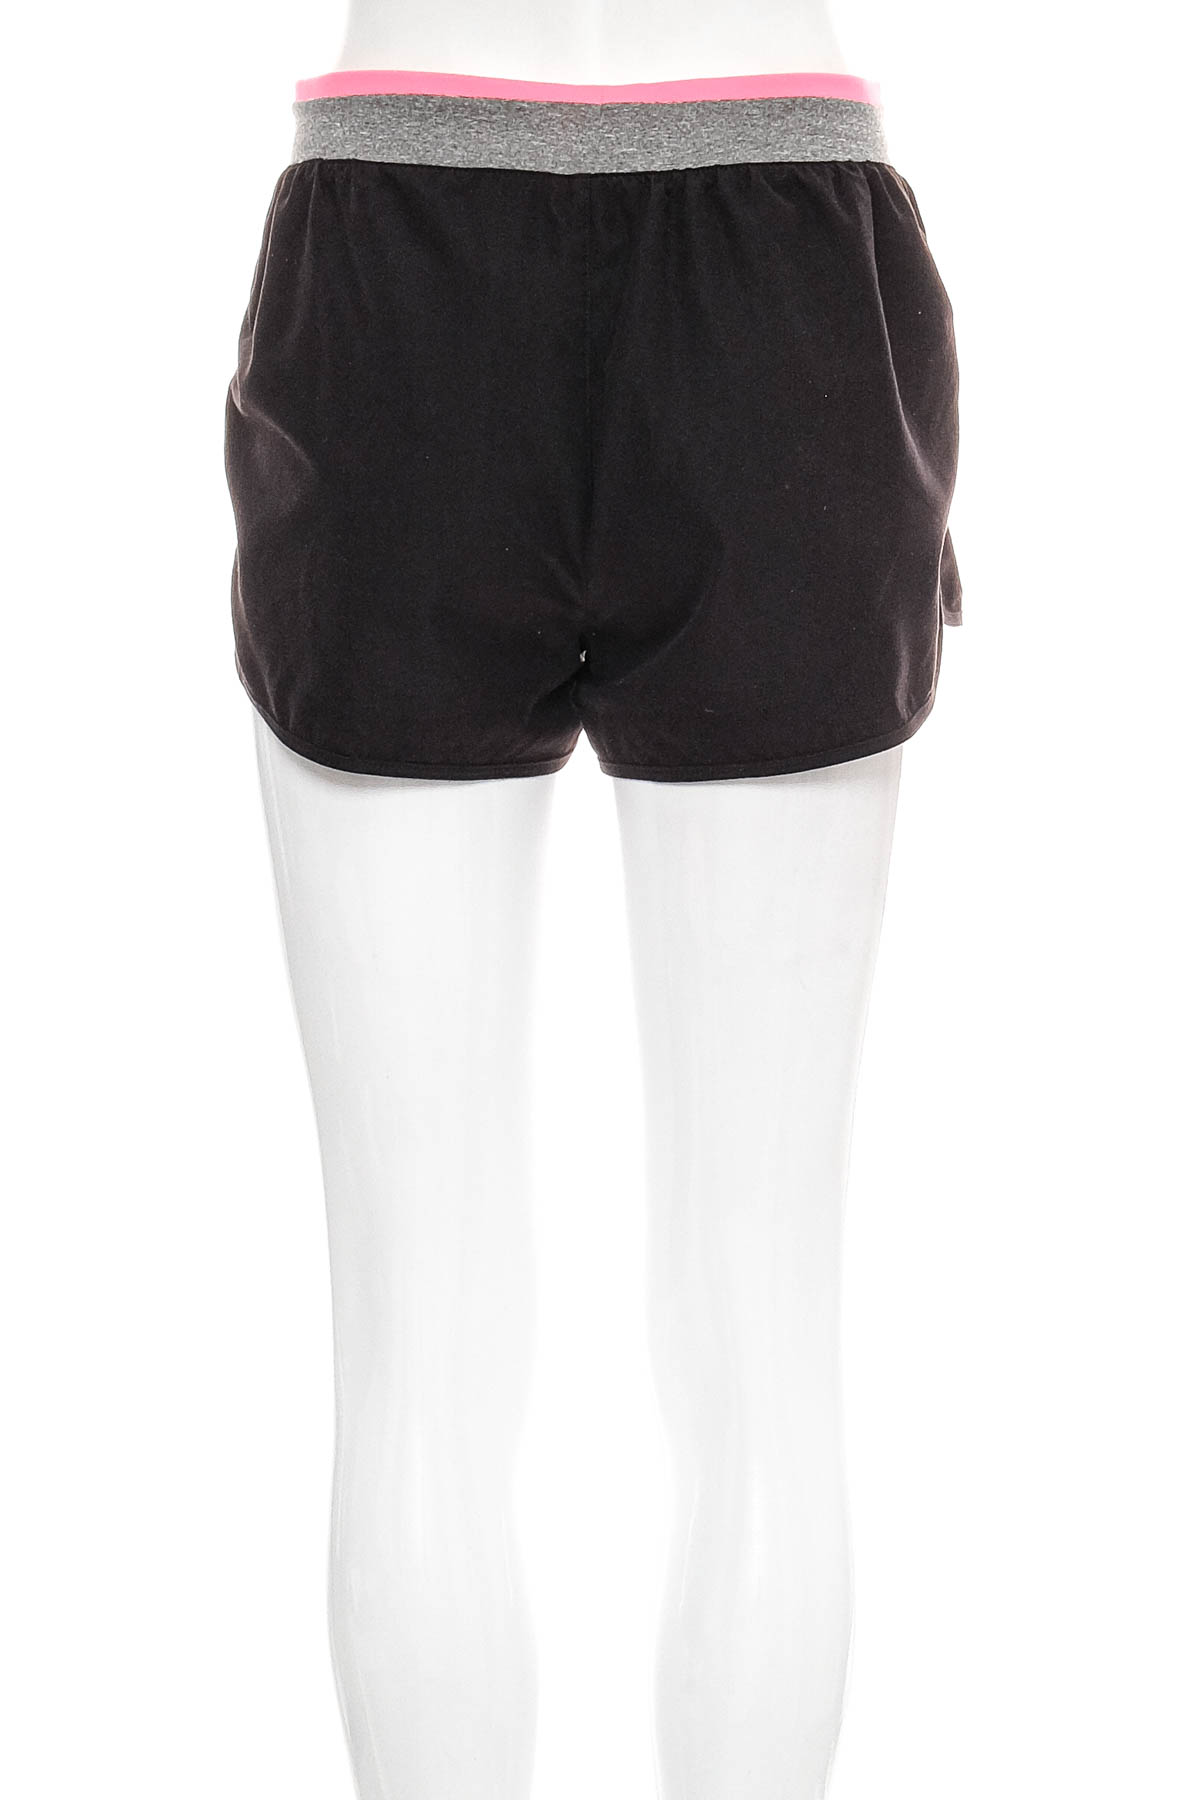 Female shorts - Domyos - 1